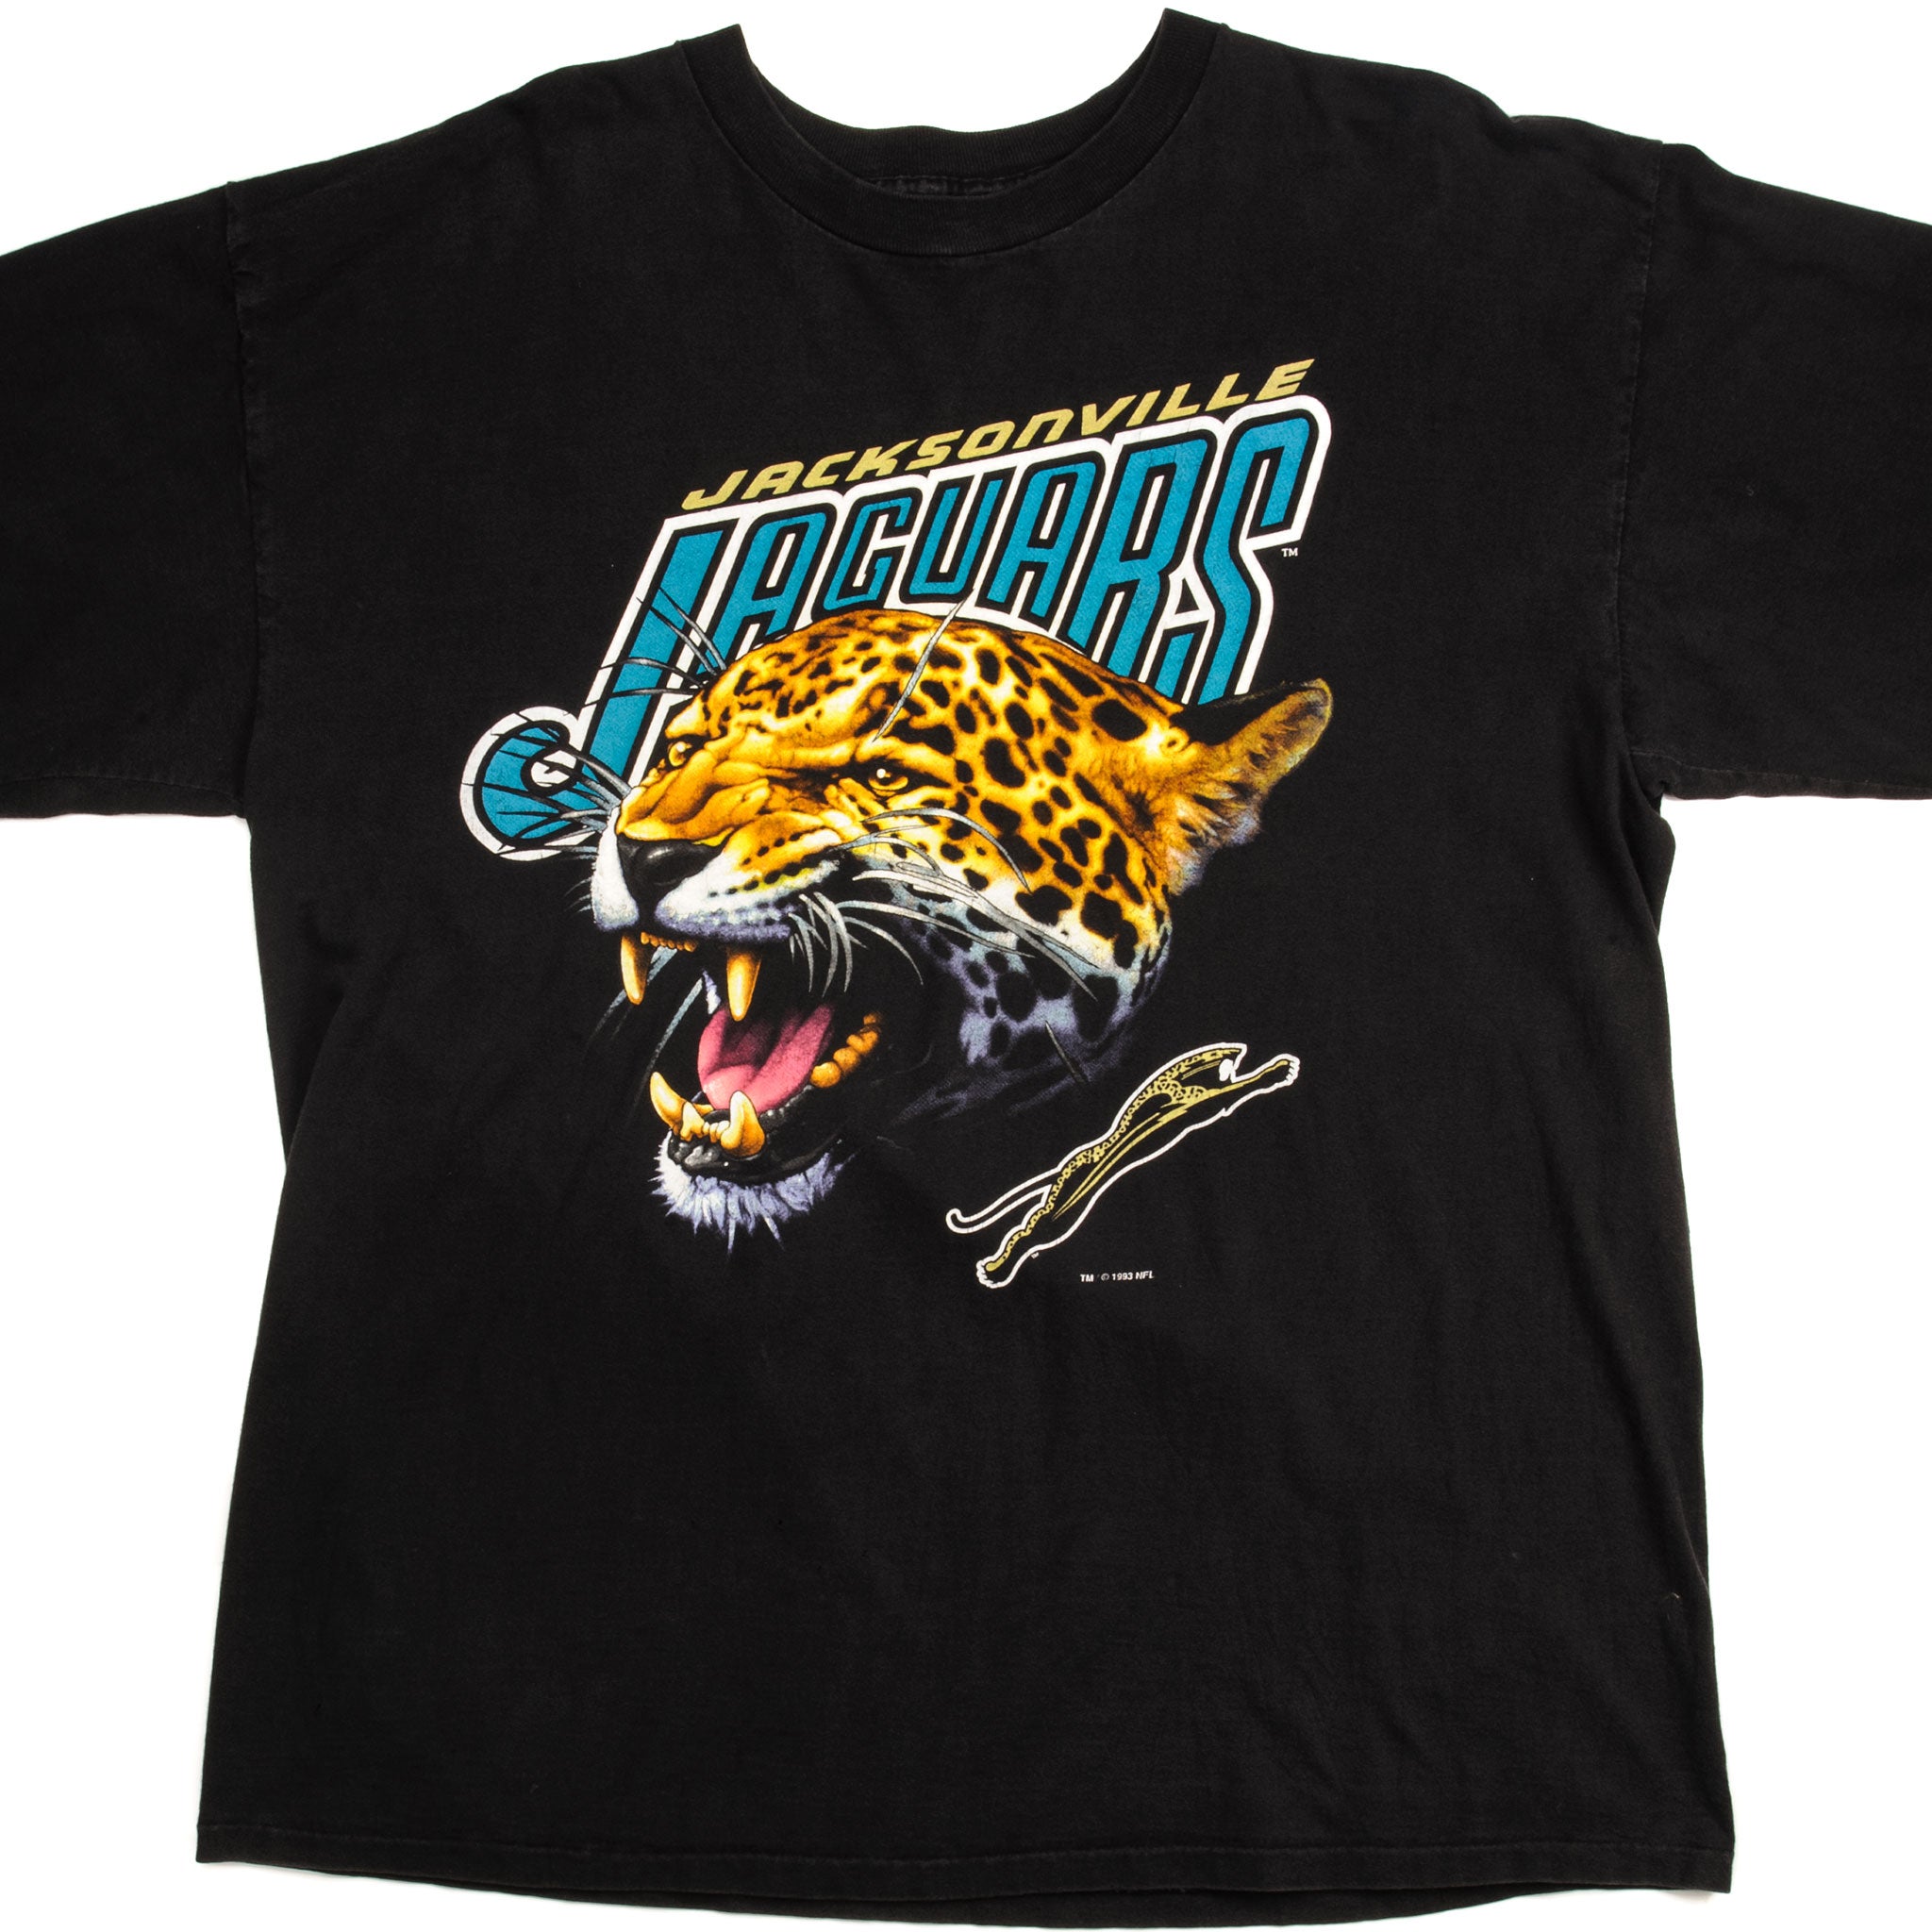 retro jaguars shirt